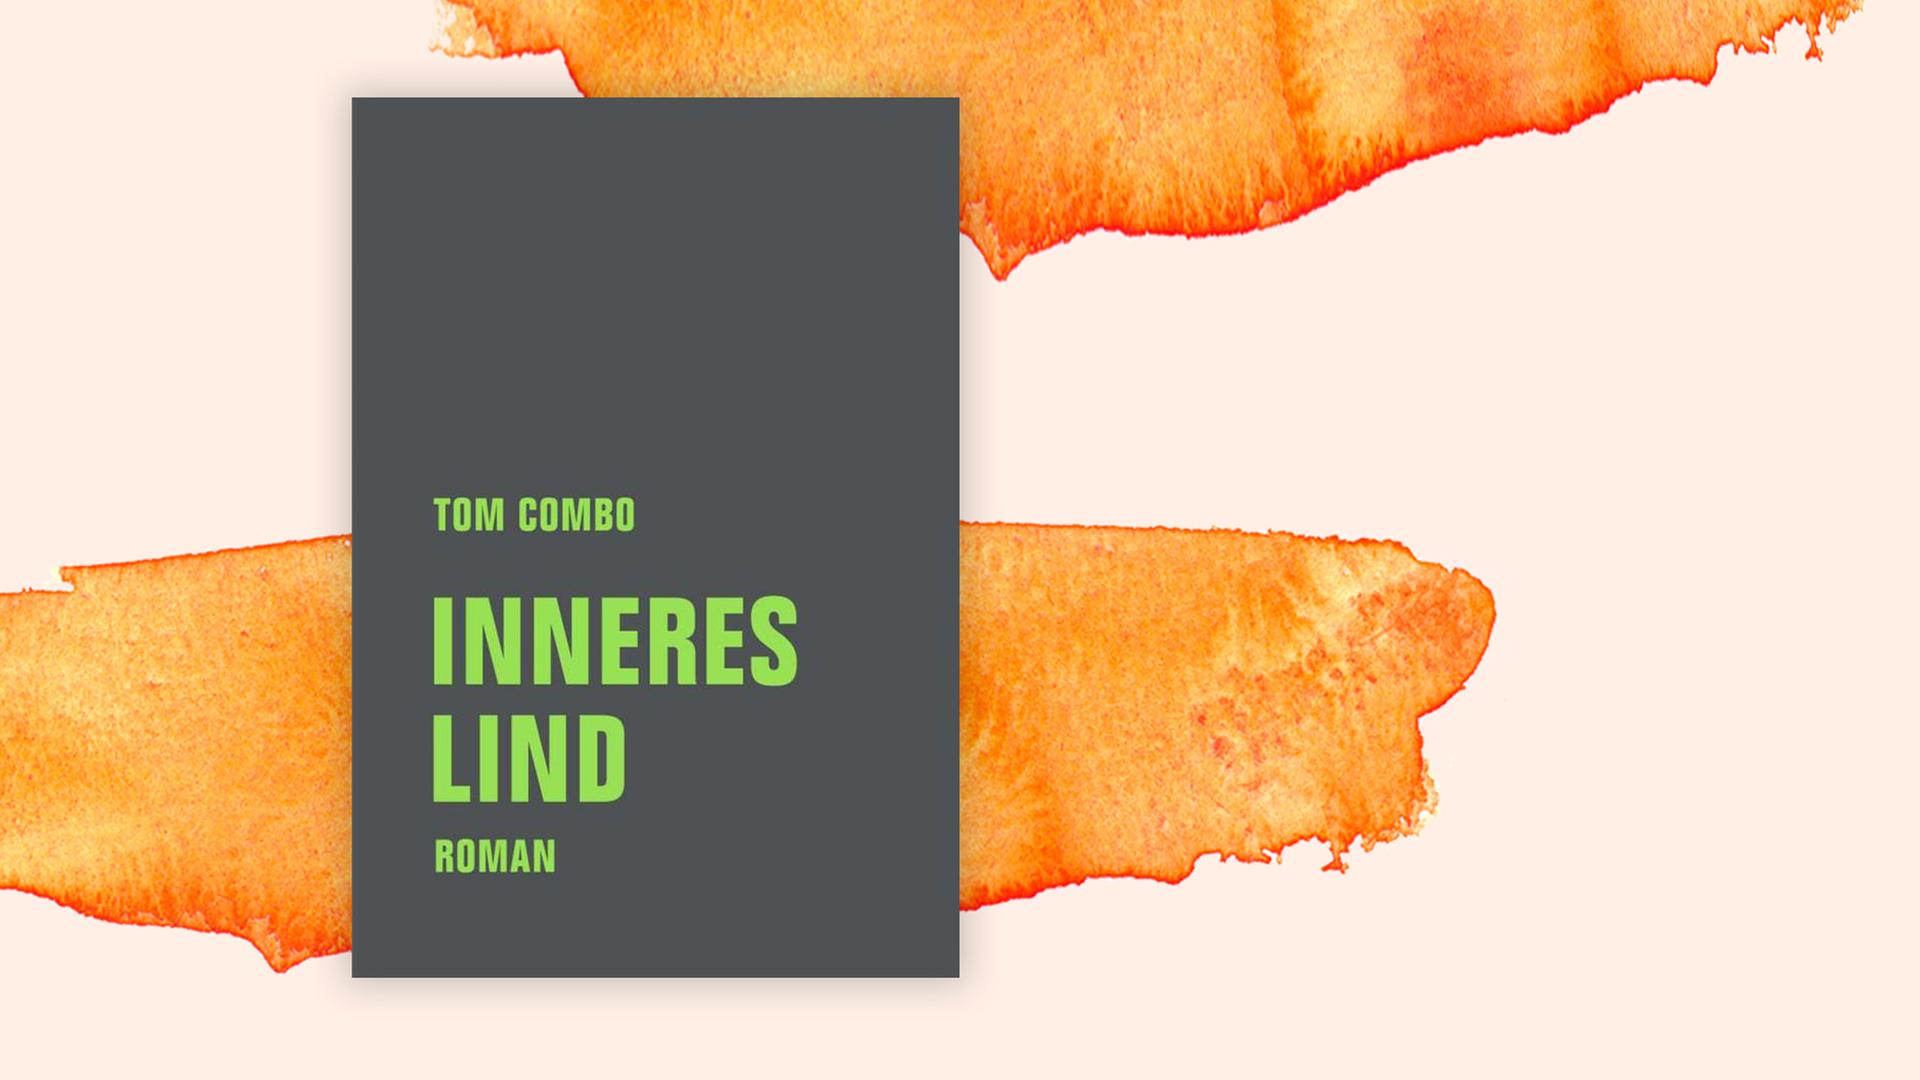 Buchcover zu Tom Combo: "Inneres Lind"